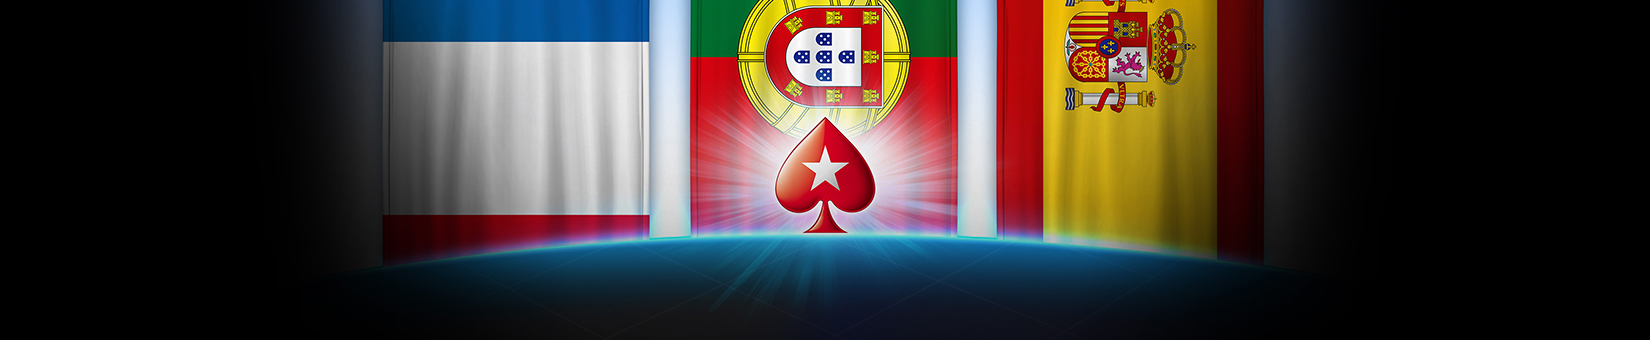 casino bônus no deposit brasil